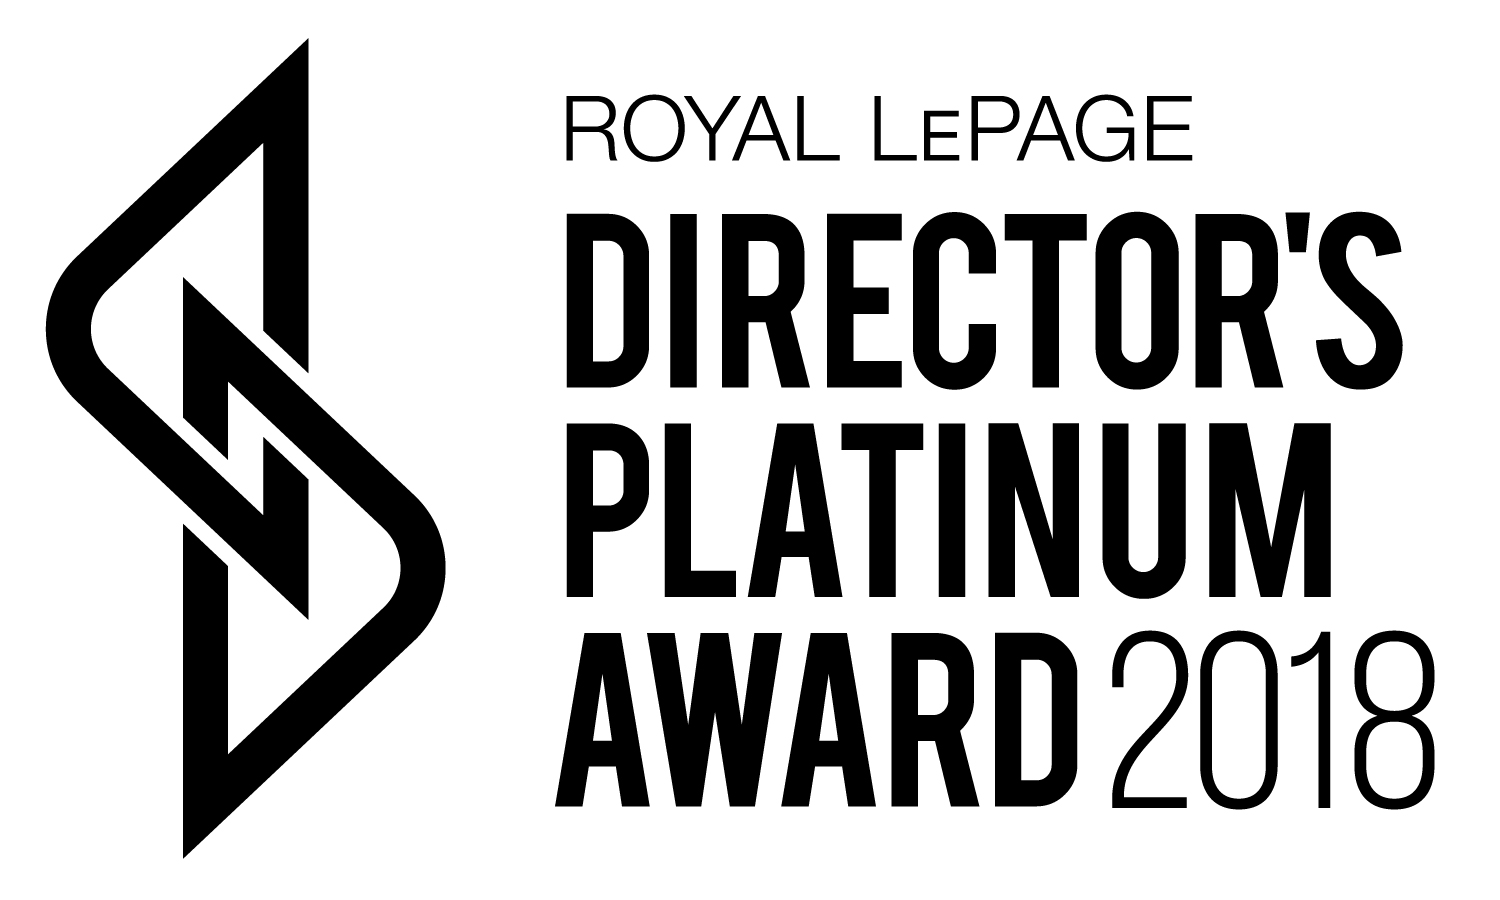 RLP-DirectorsPlatinum-2018-EN-BLACK.jpg